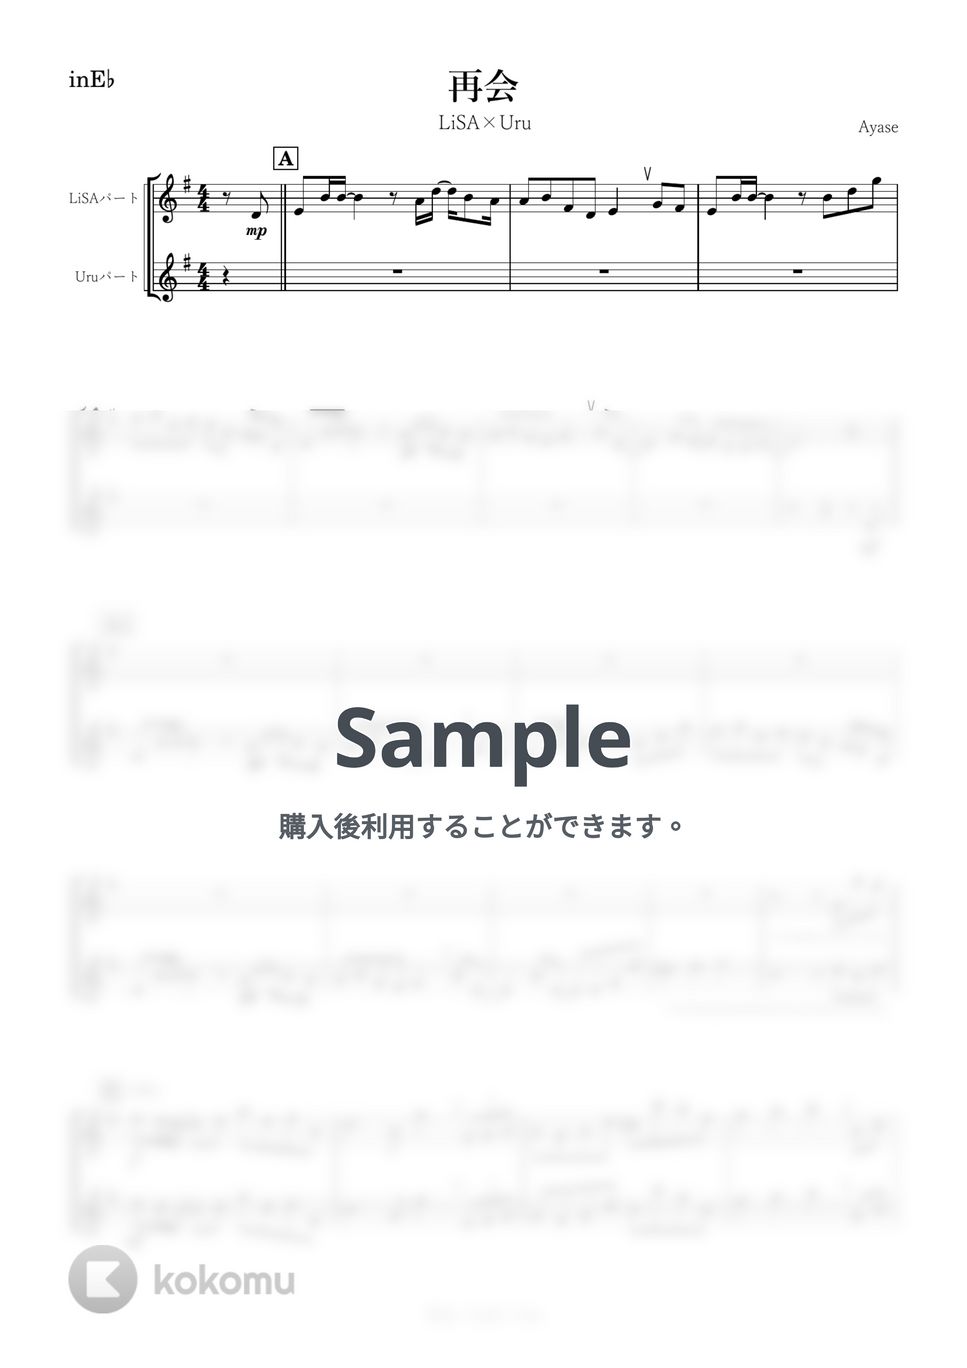 LiSA×Uru - 再会 (E♭) by kanamusic